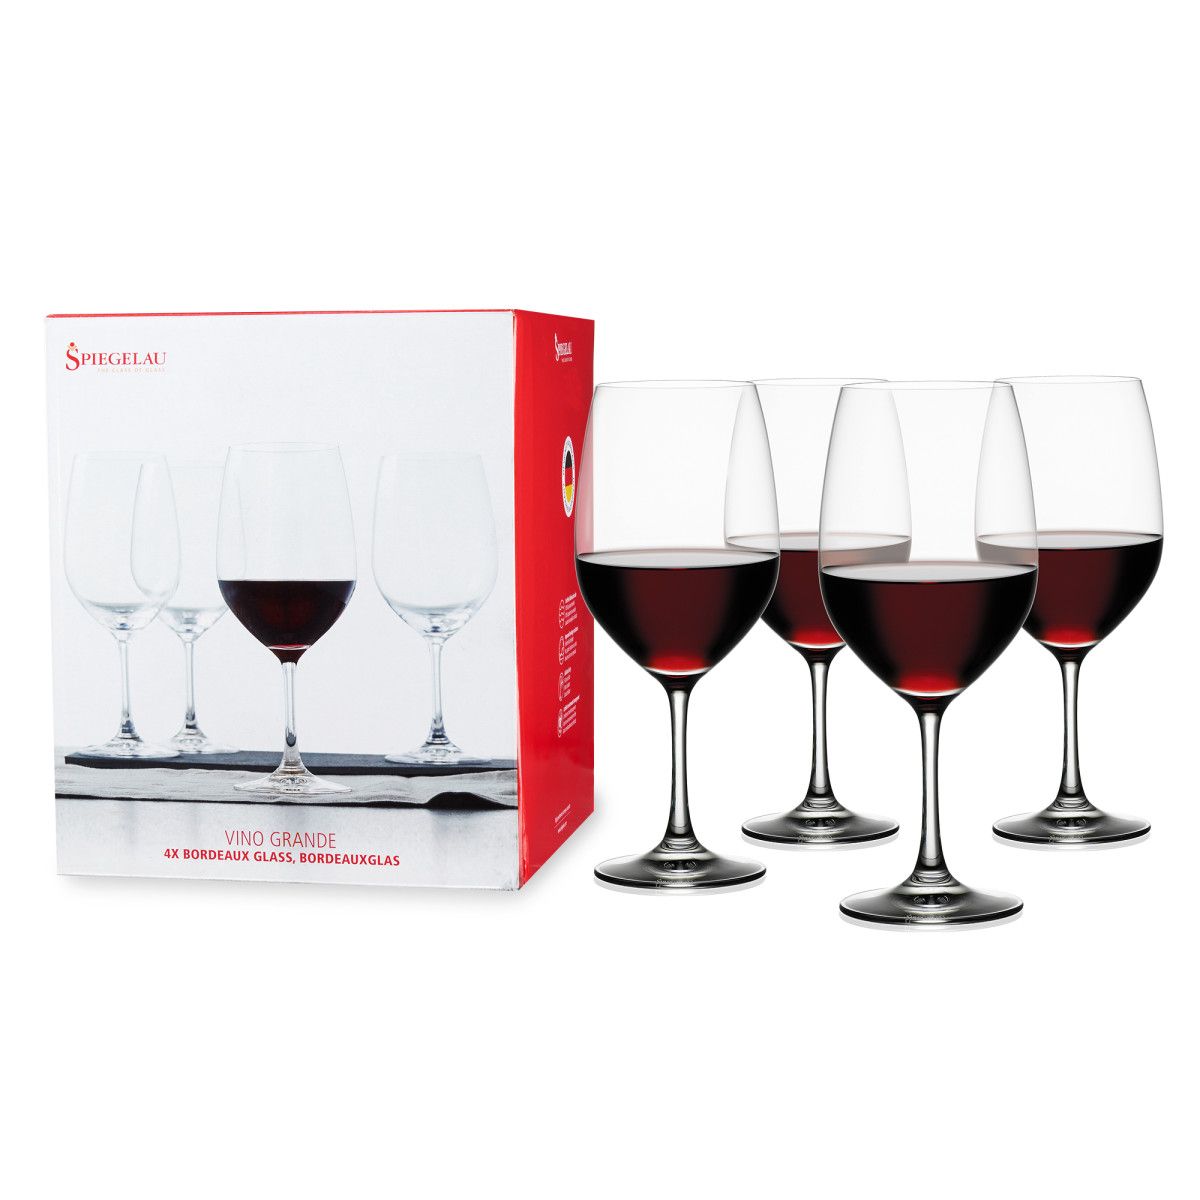 Spiegelau Vino Grande Bordeaux Wine Glasses, Set of 4, European